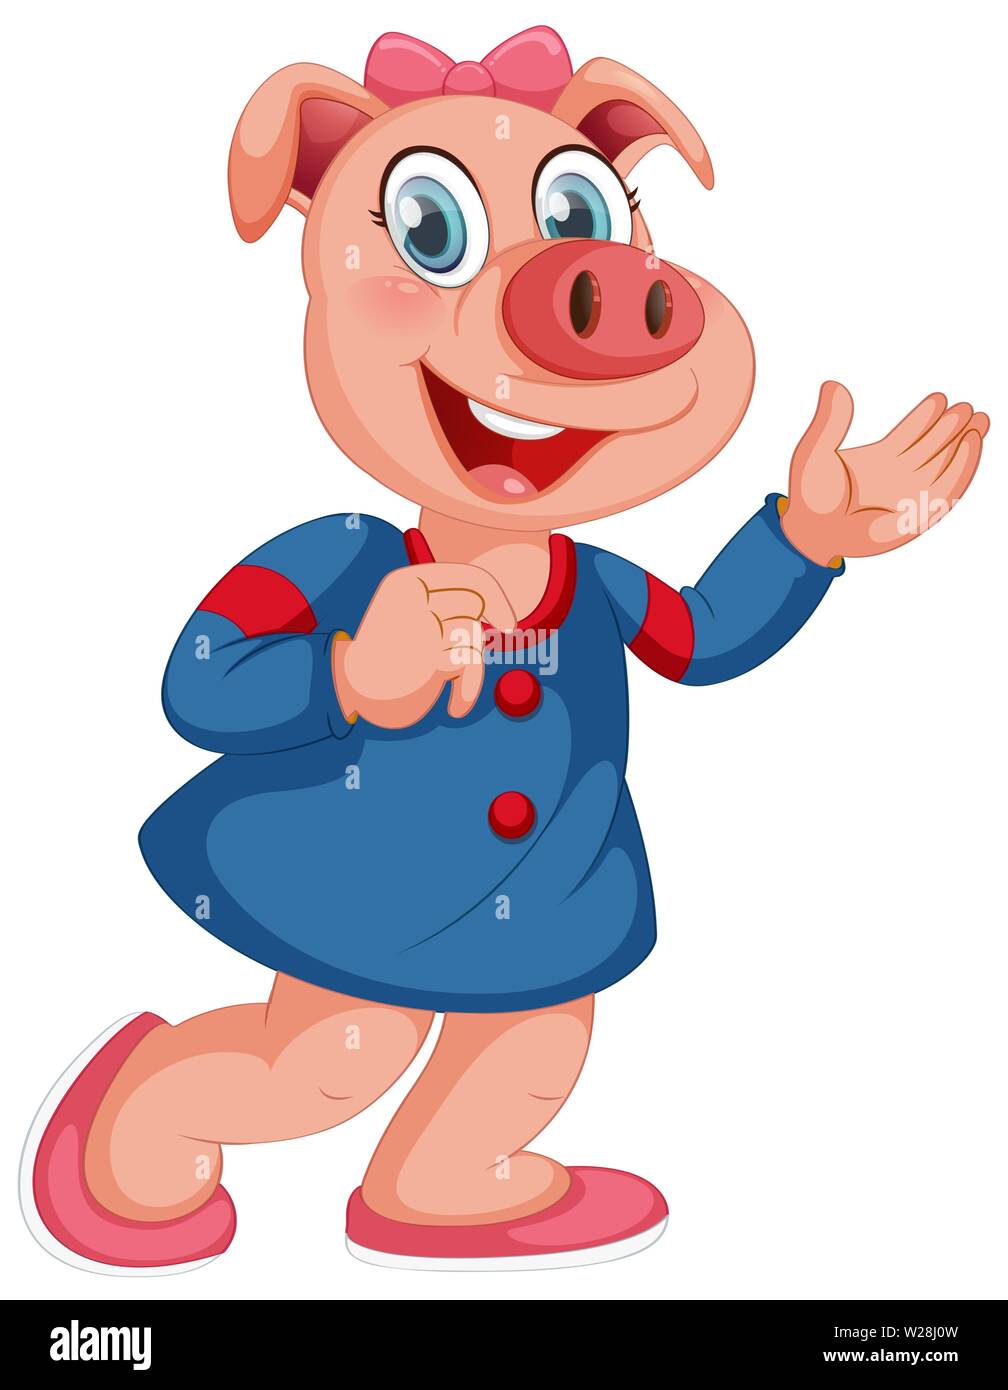 A cute pig cartoon character illustration Stock Vector